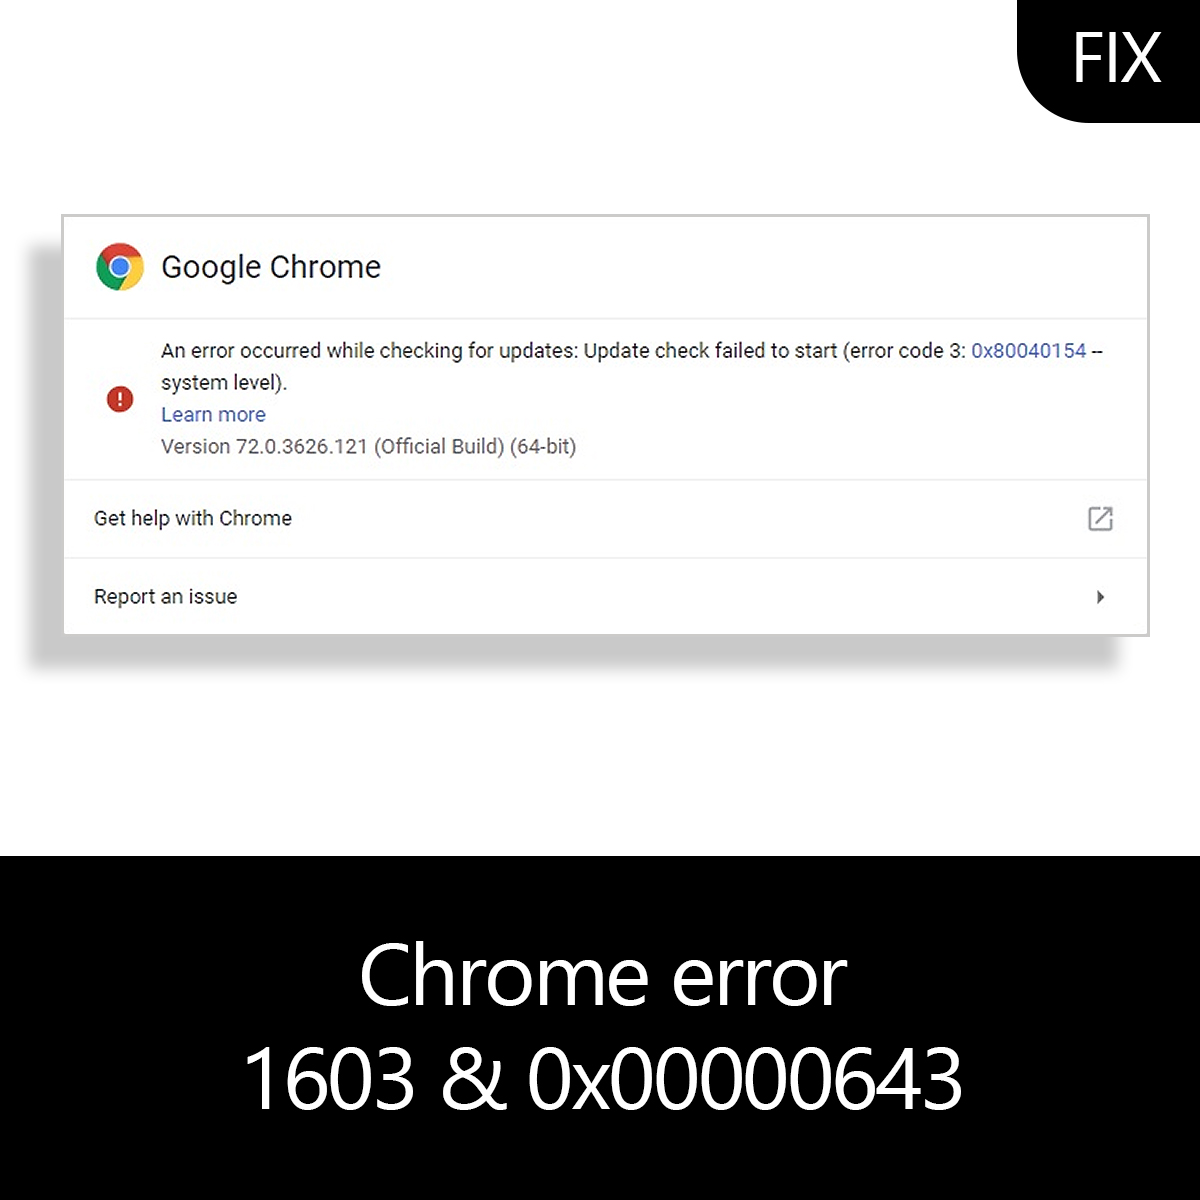 google chrome error 3